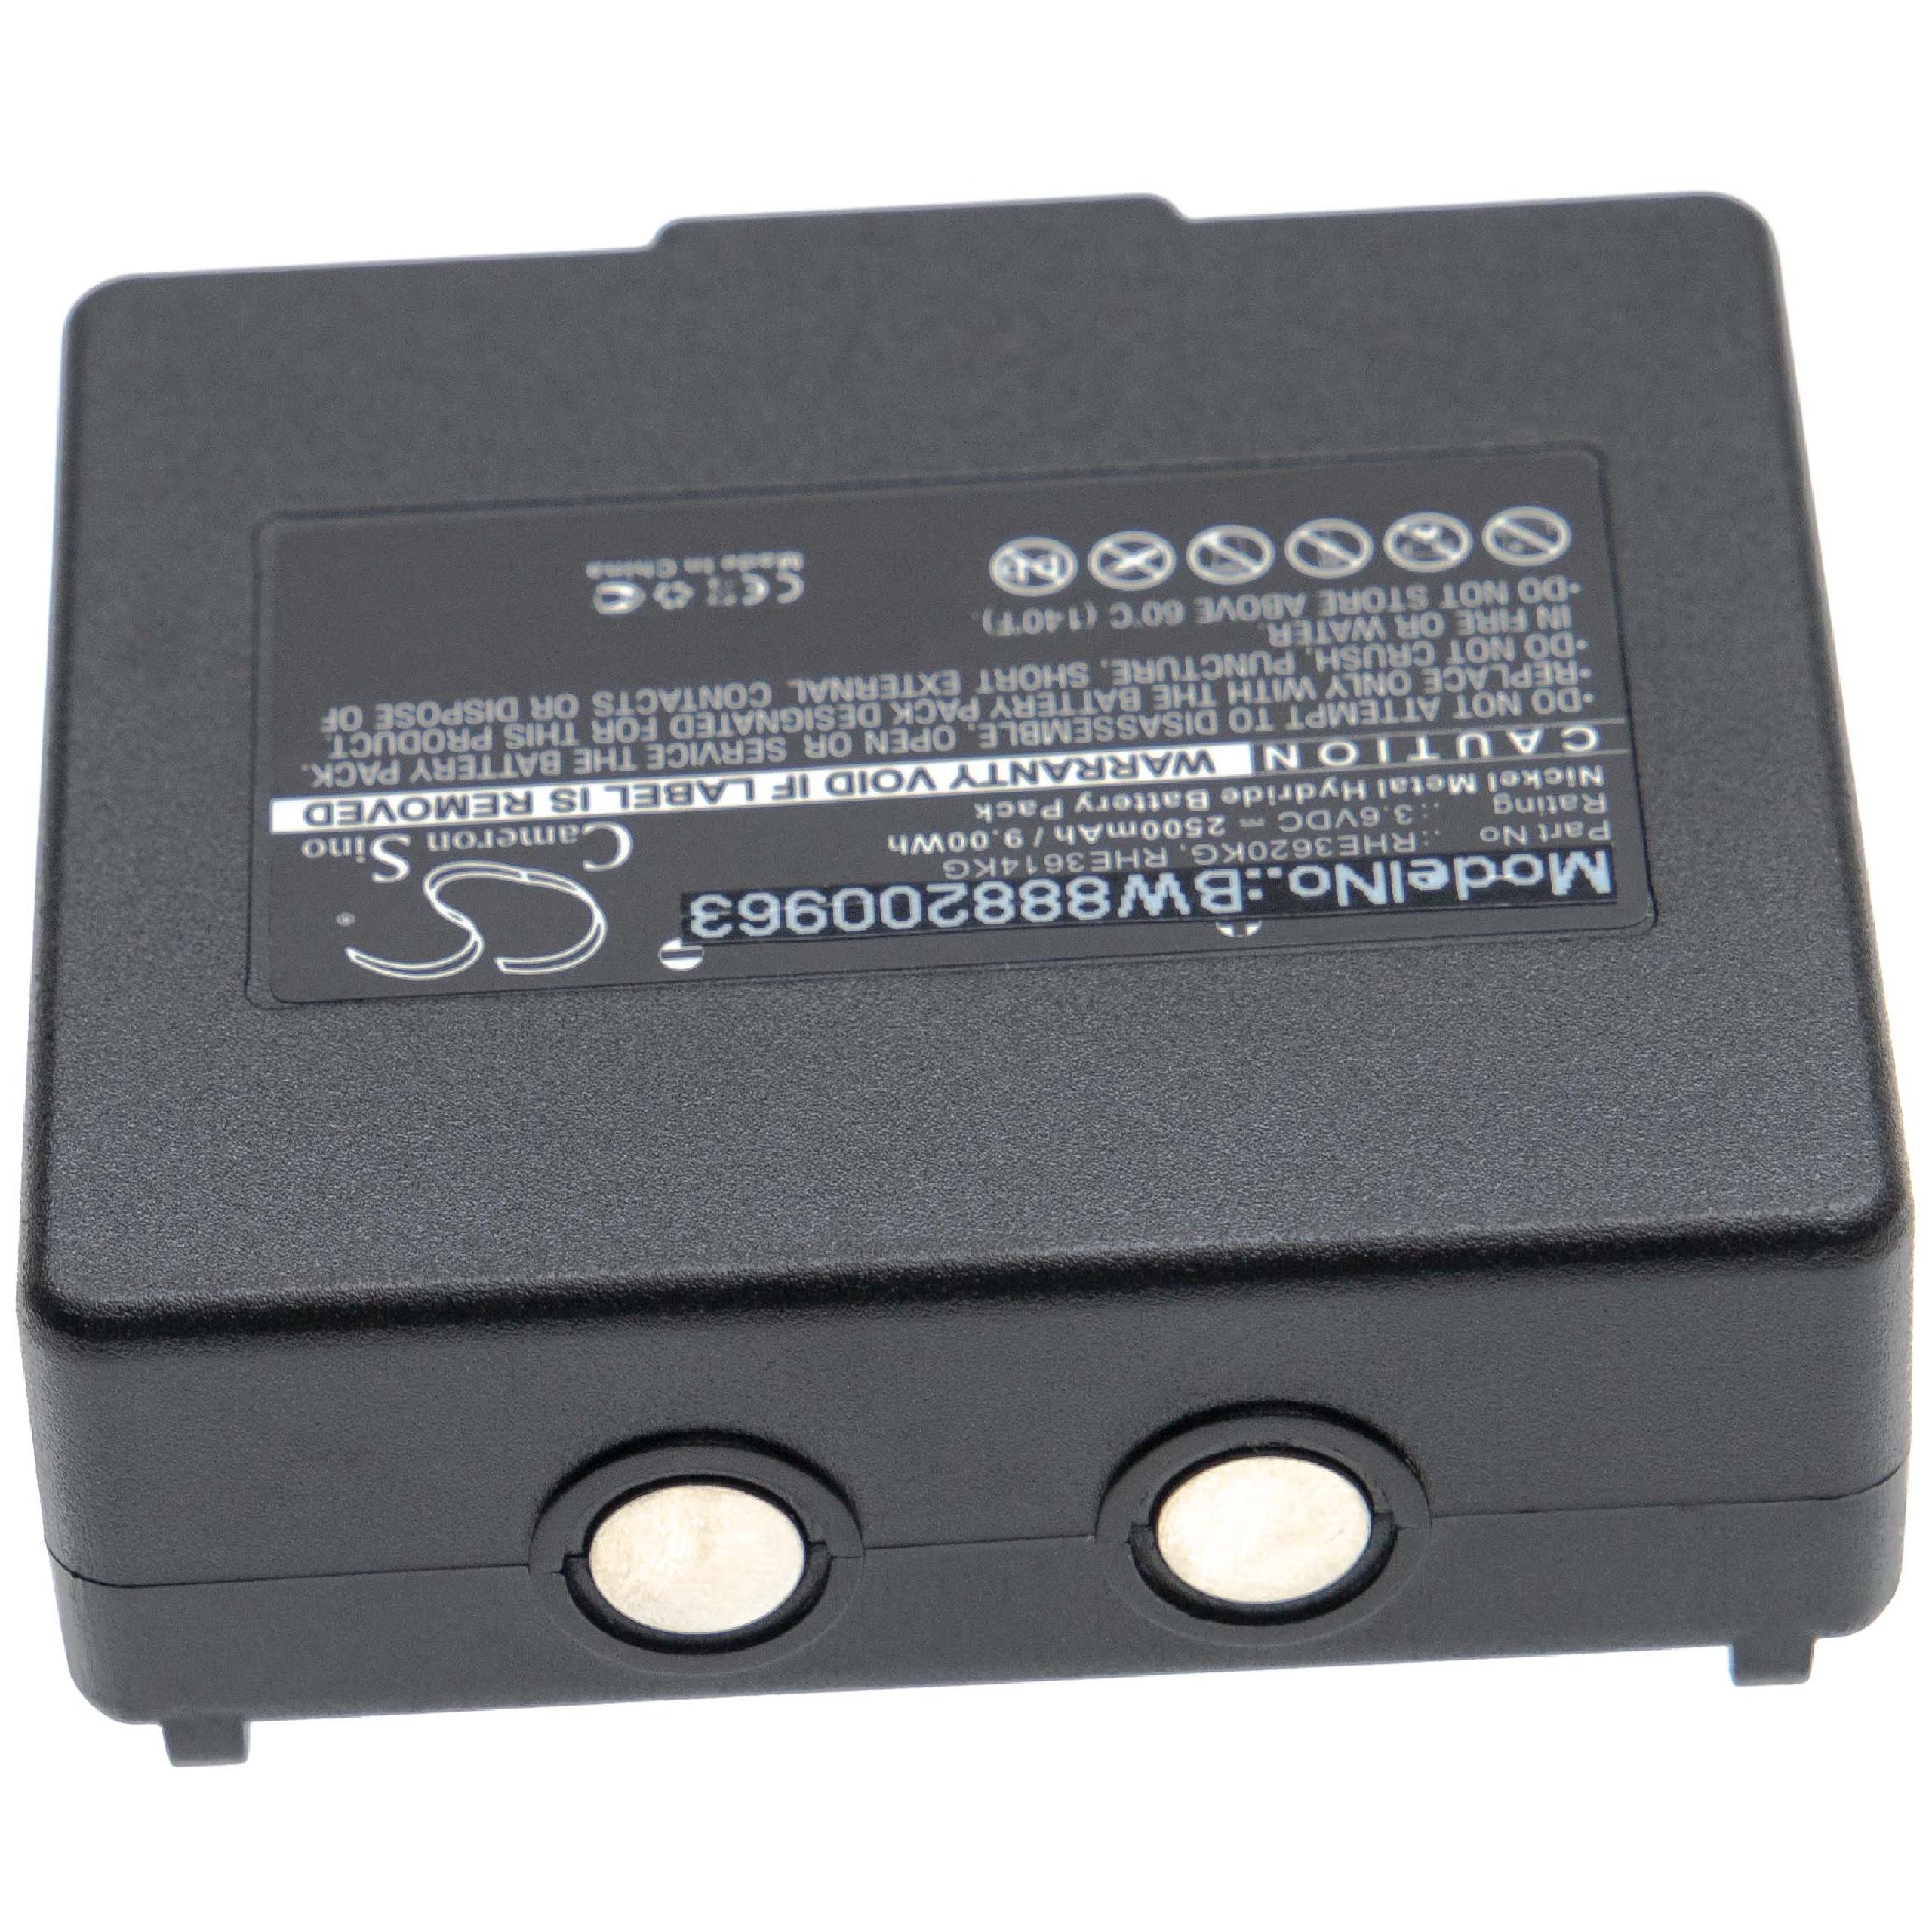 Akumulator do zdalnego sterowania zamiennik Abitron KH68300990, EX2-22 - 2500 mAh 3,6 V NiMH